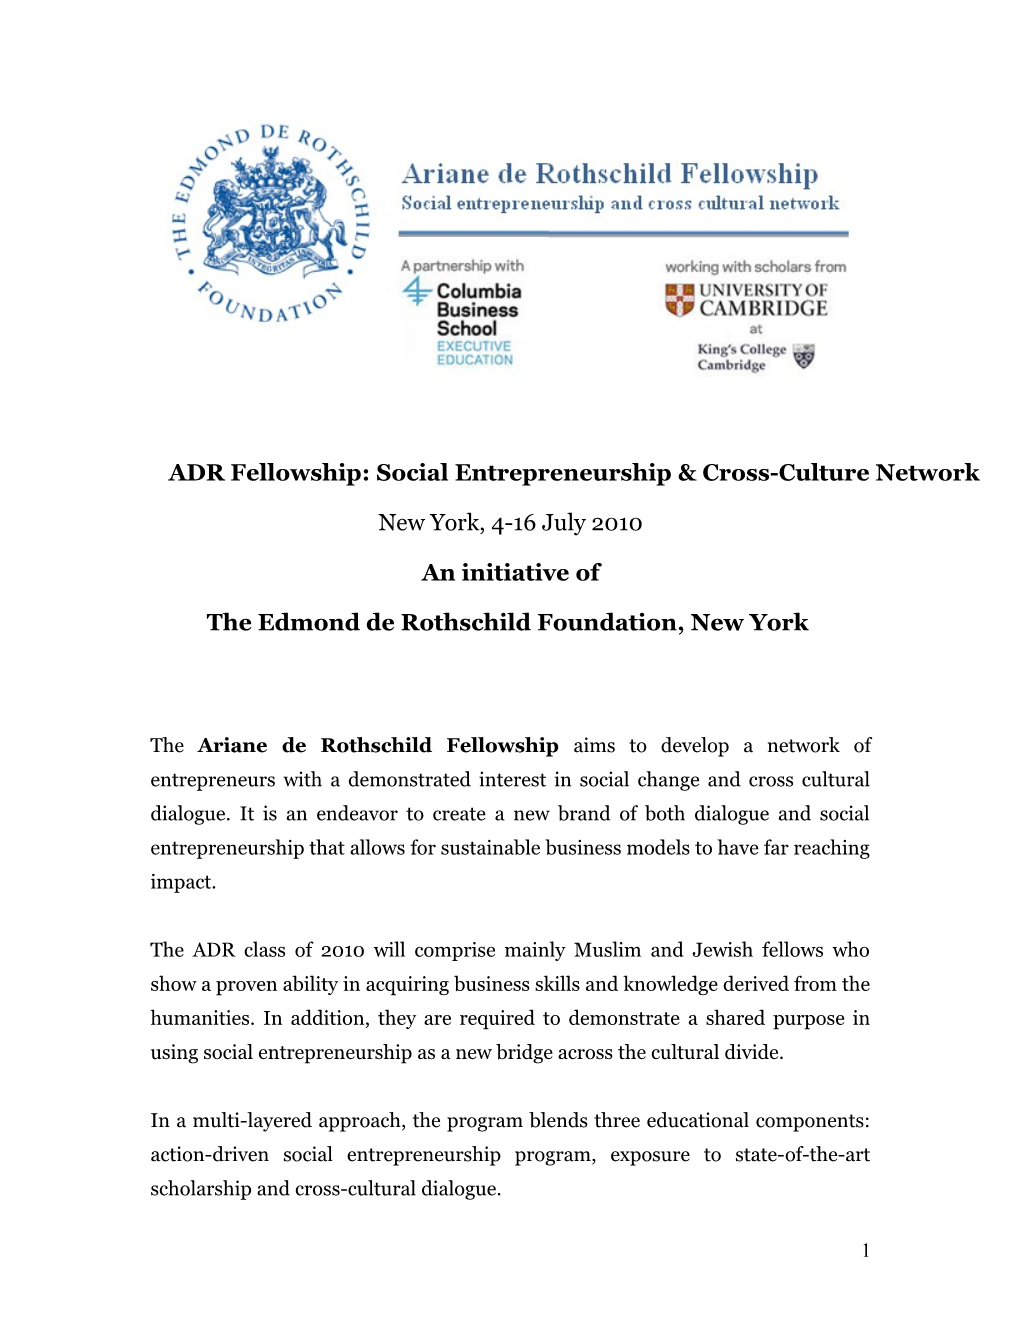 ADR Fellowship: Social Entrepreneurship & Cross-Culture Network